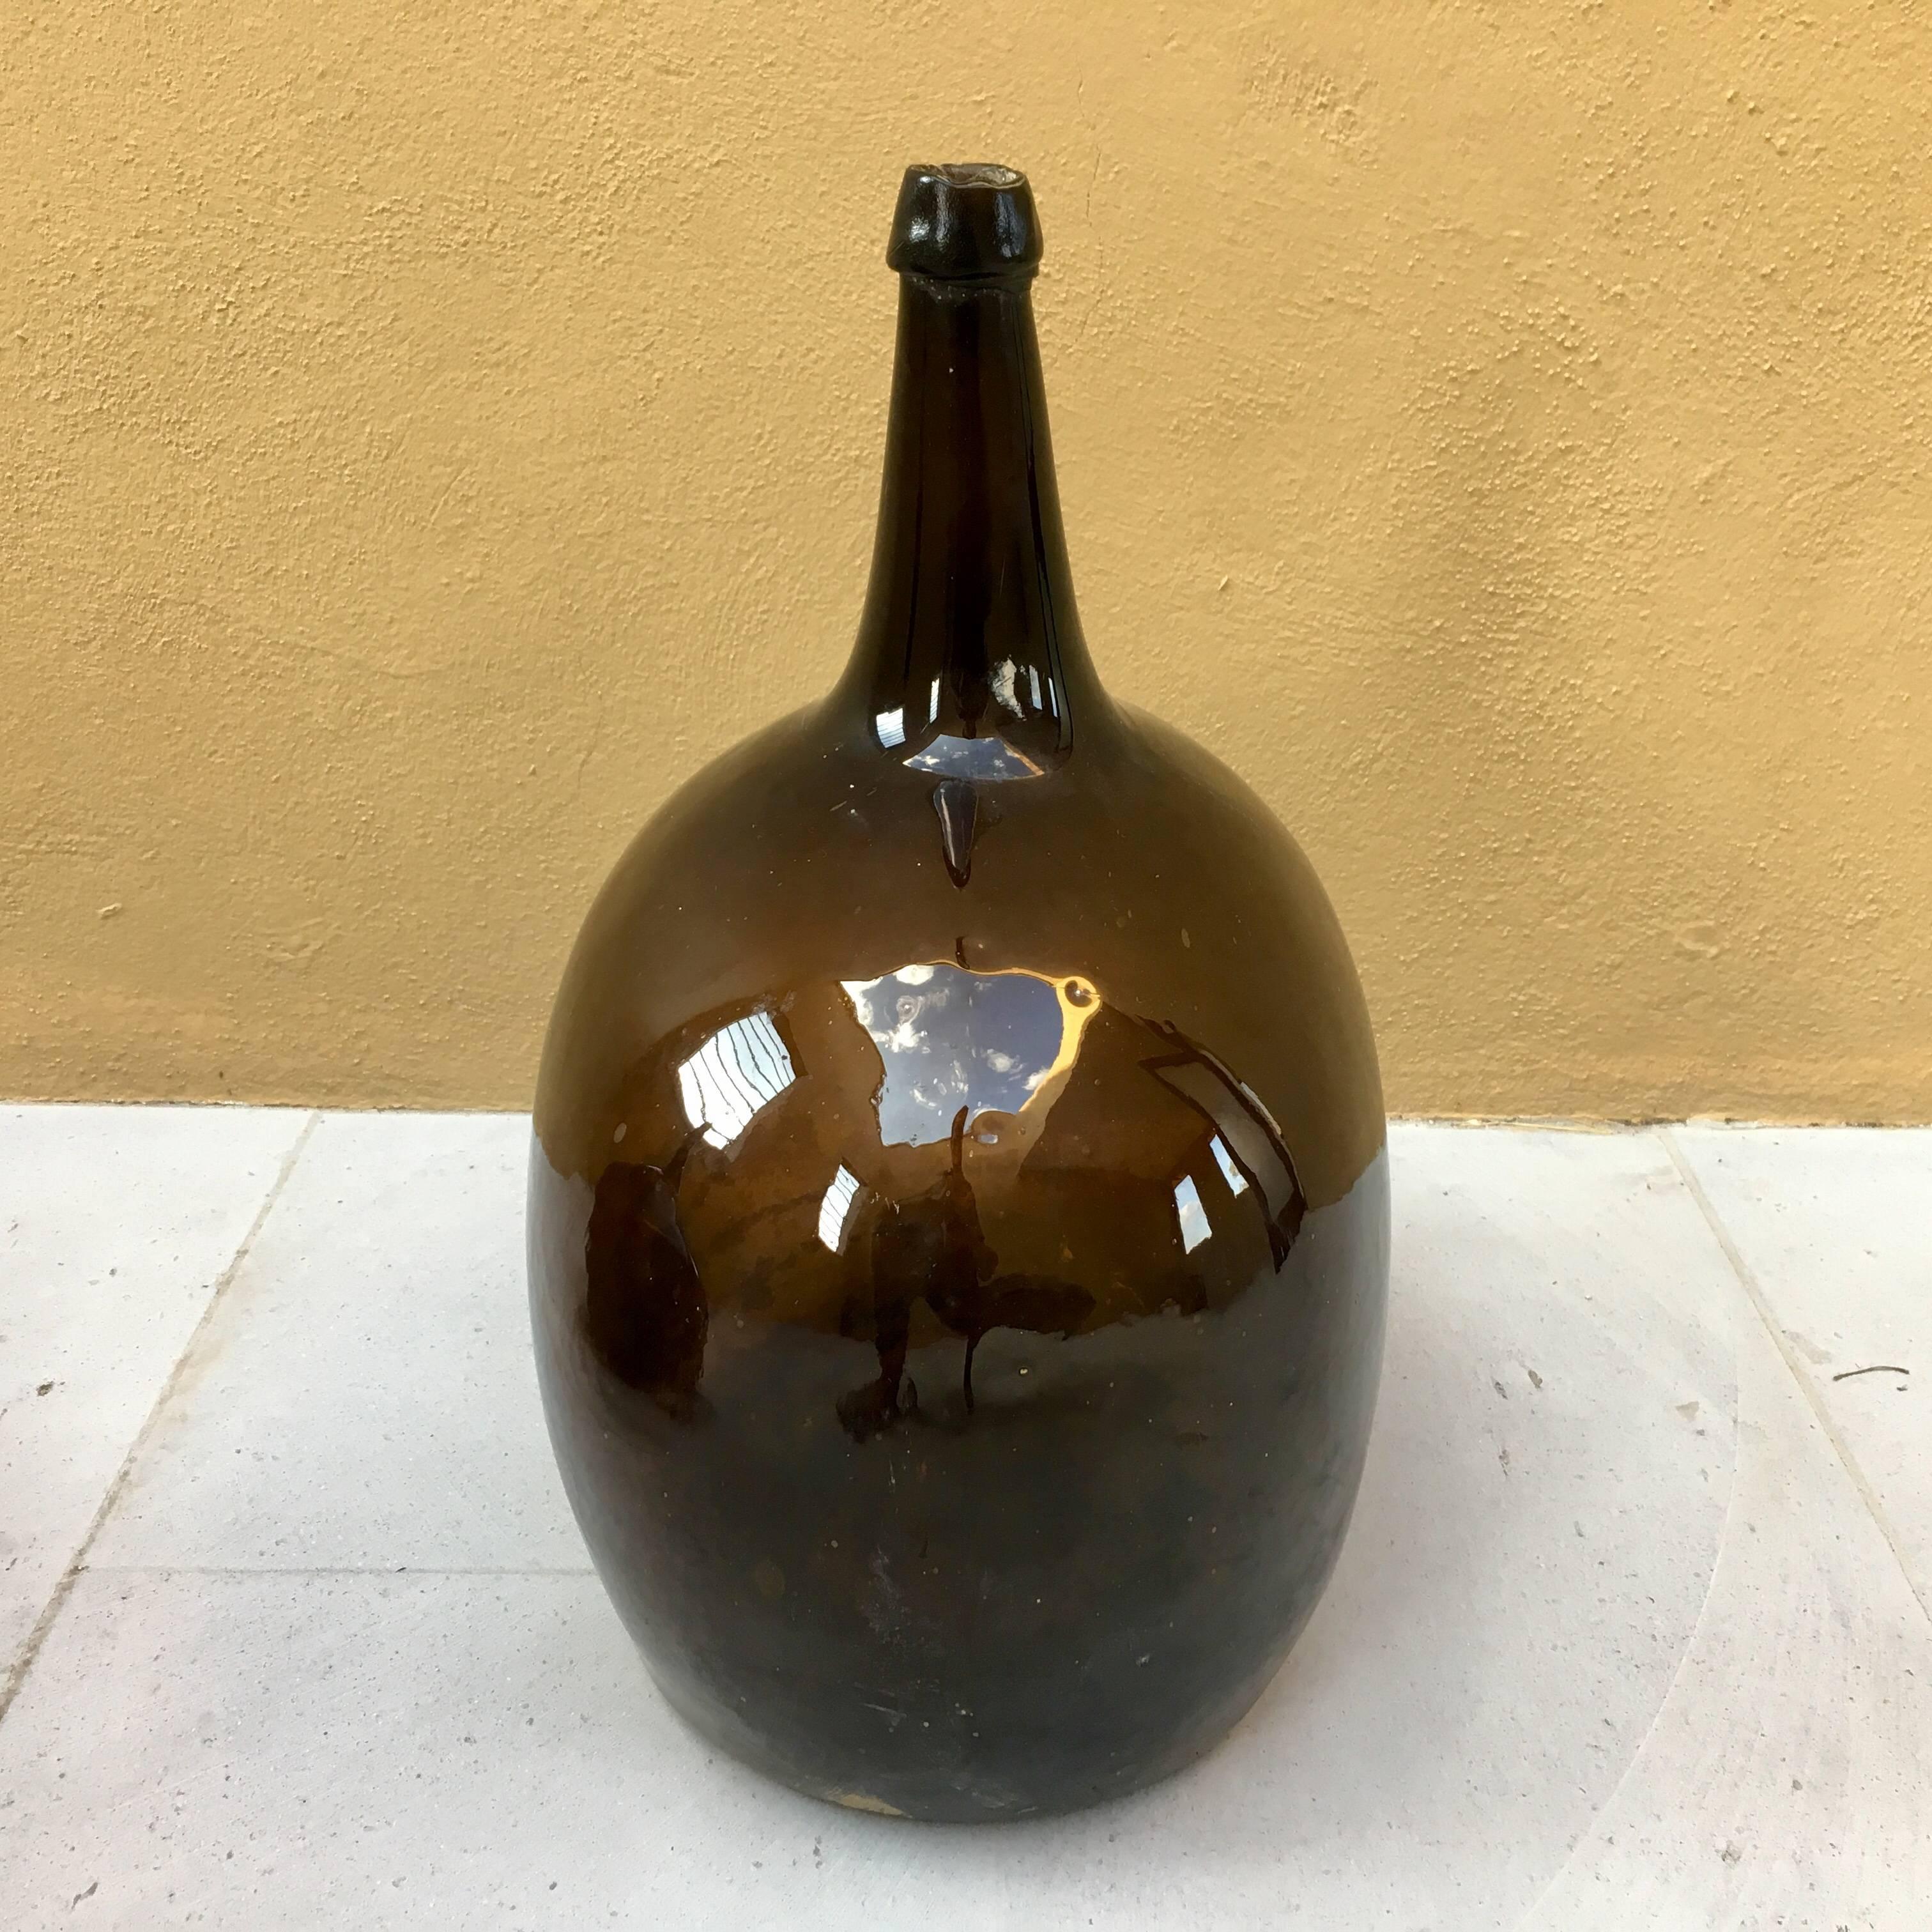 Excellent condition, handblown, non-molded mezcal jug in dark brown glass from Veracruz, Mexico.